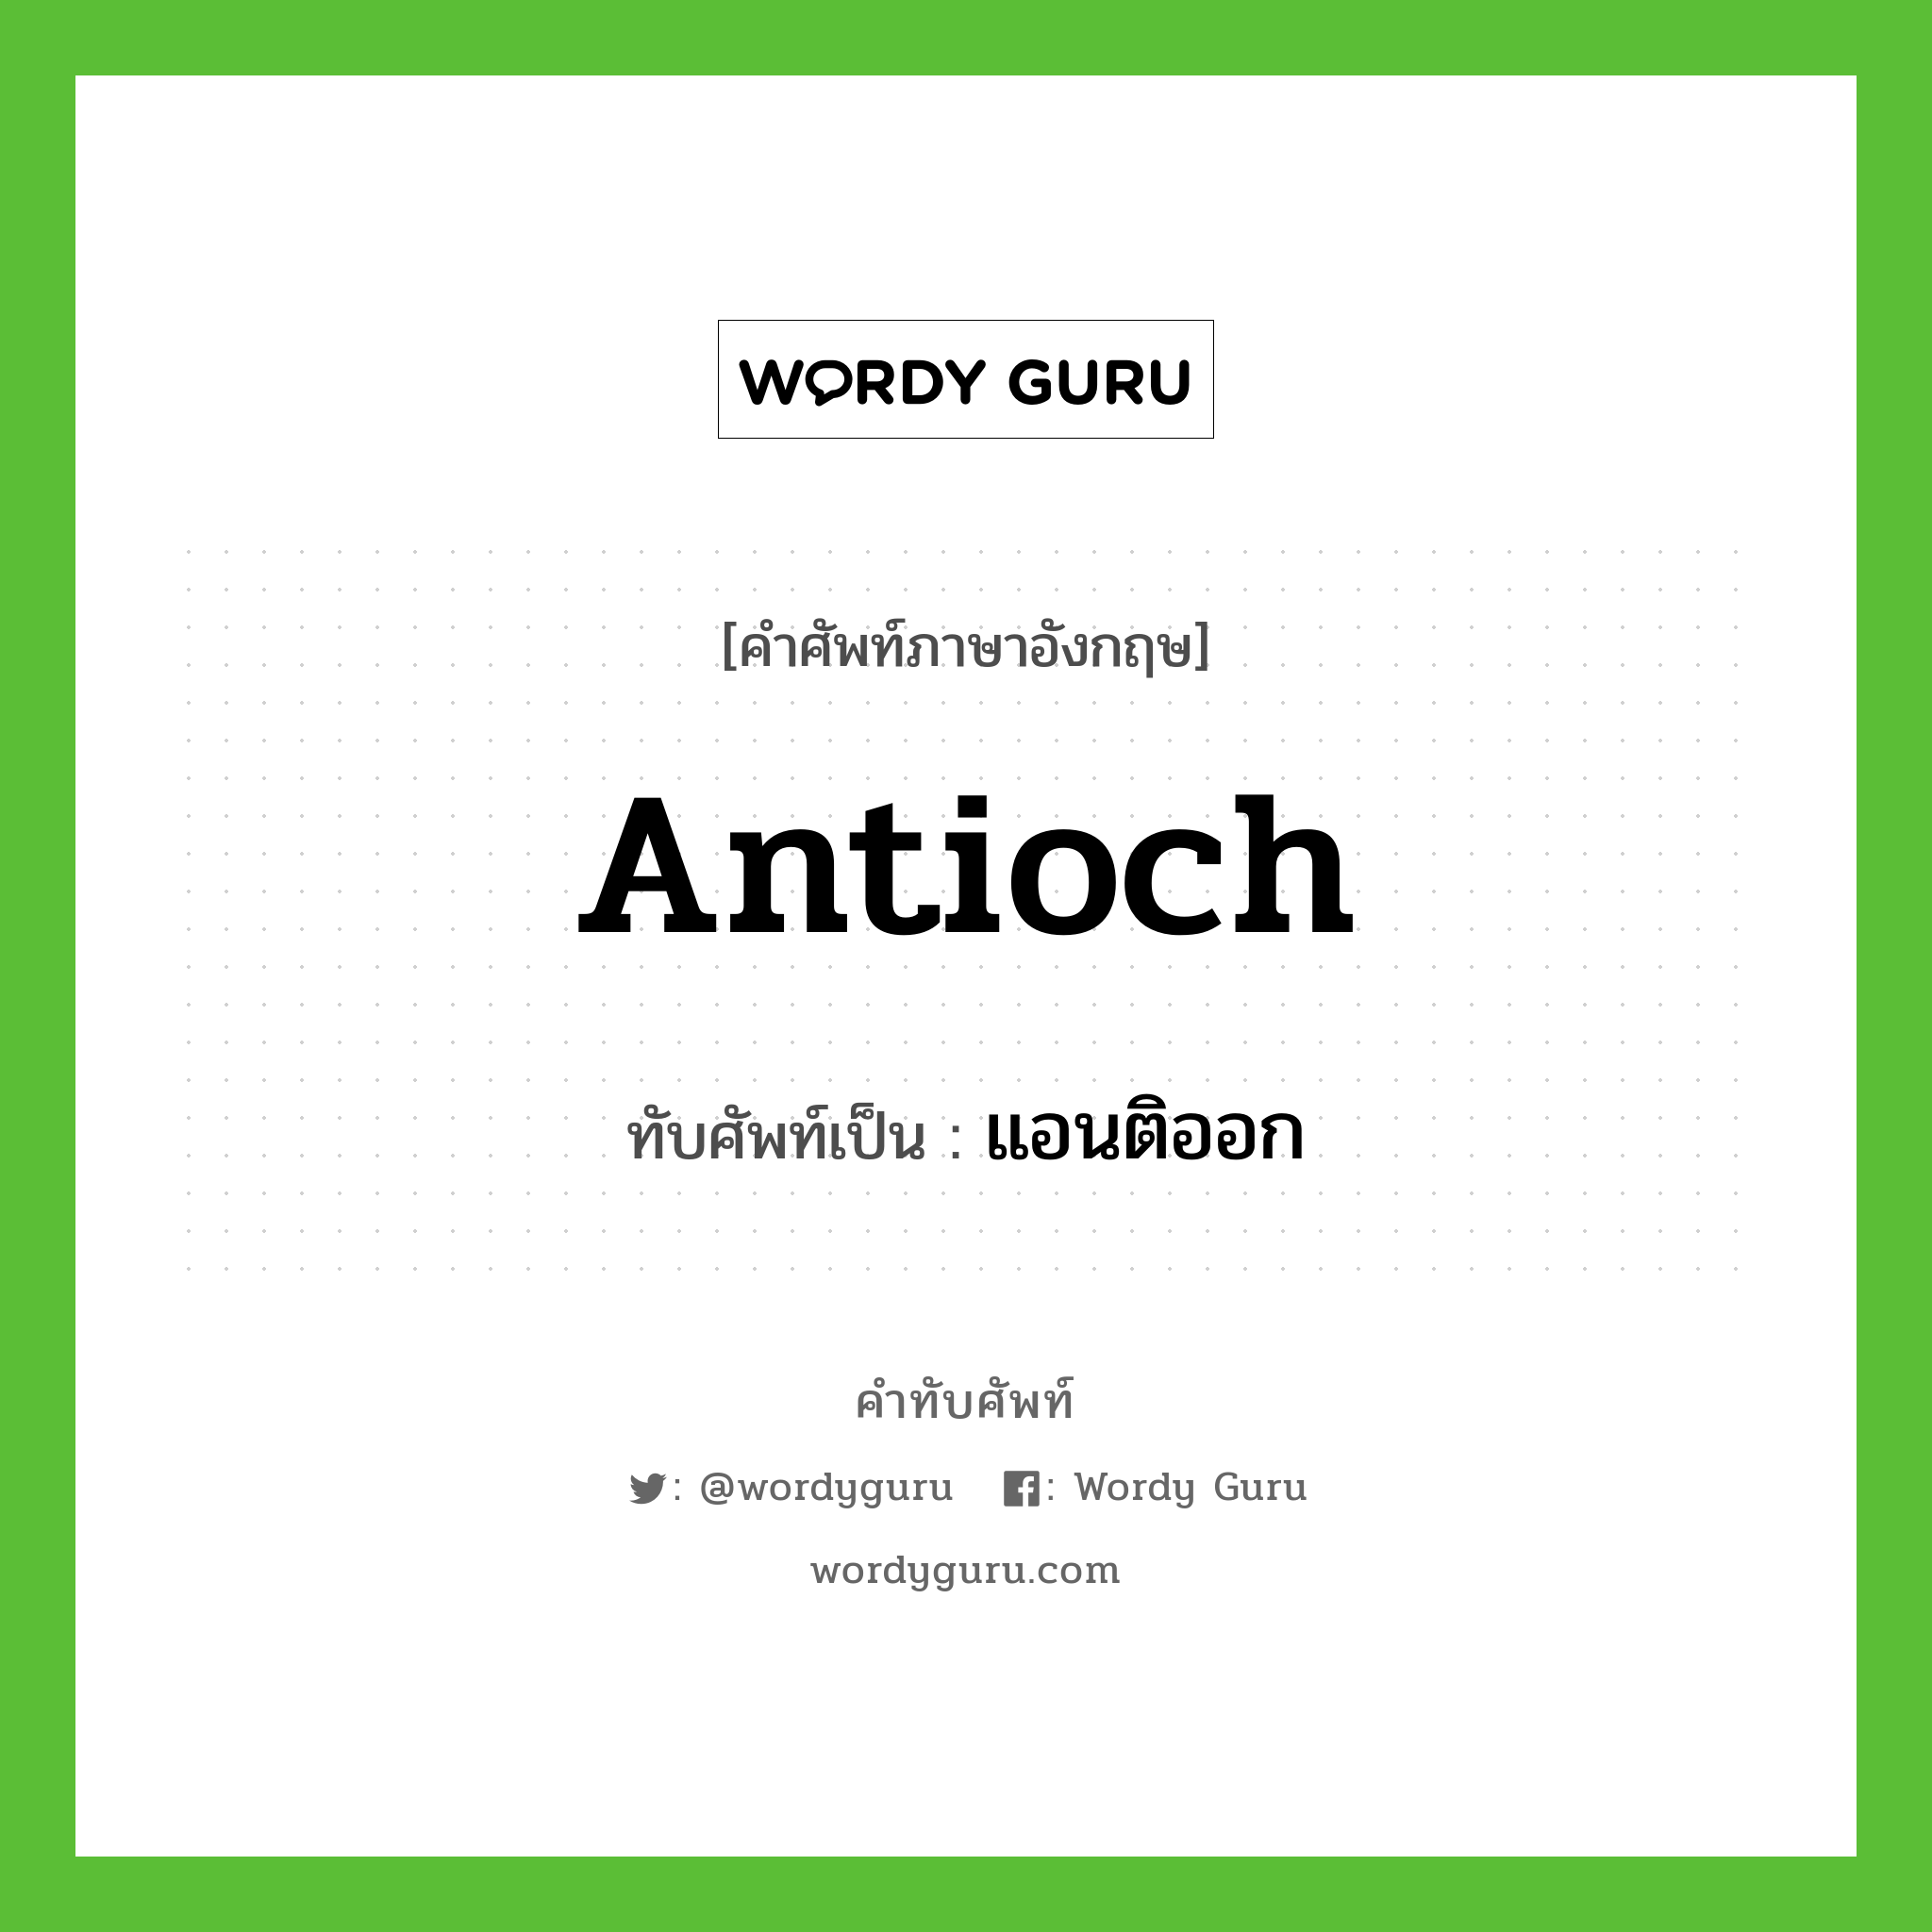 Antioch เขียนเป็นคำไทยว่าอะไร?, คำศัพท์ภาษาอังกฤษ Antioch ทับศัพท์เป็น แอนติออก